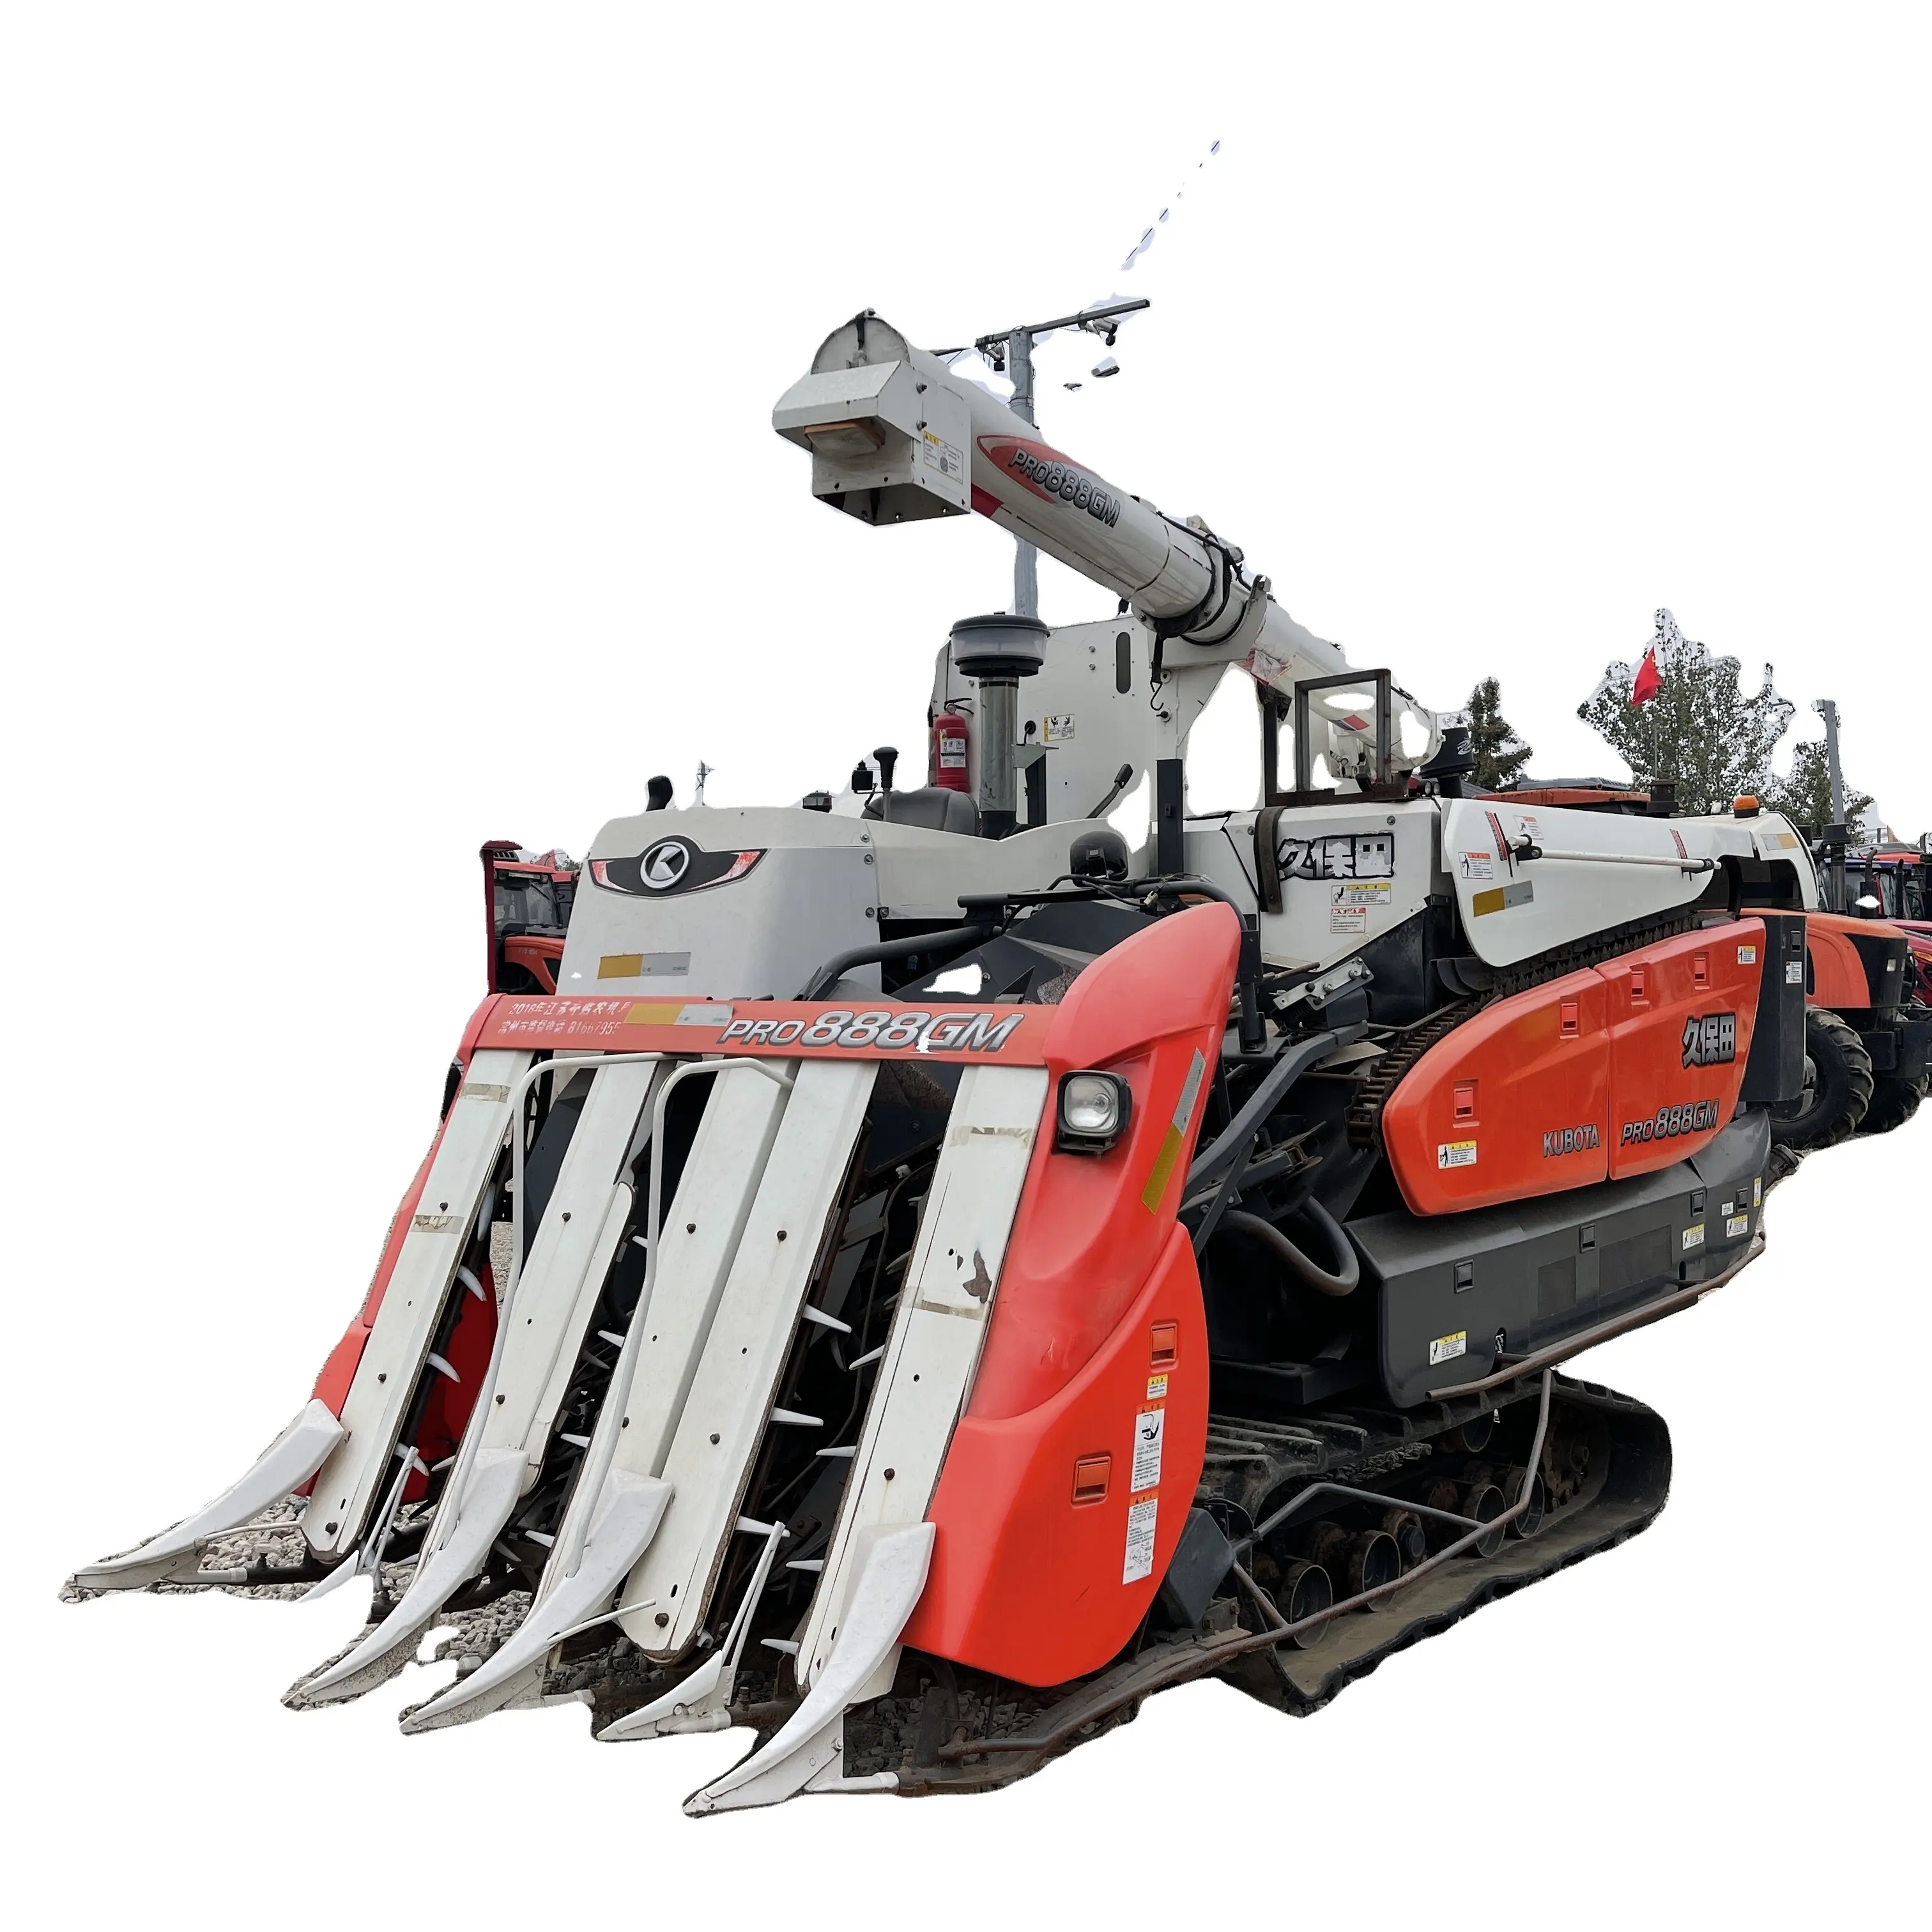 Usato Kubota combina riso grano mietitrice trattori agricoli macchine agricole macchina per la raccolta giappone Kubota DC70 DC105X